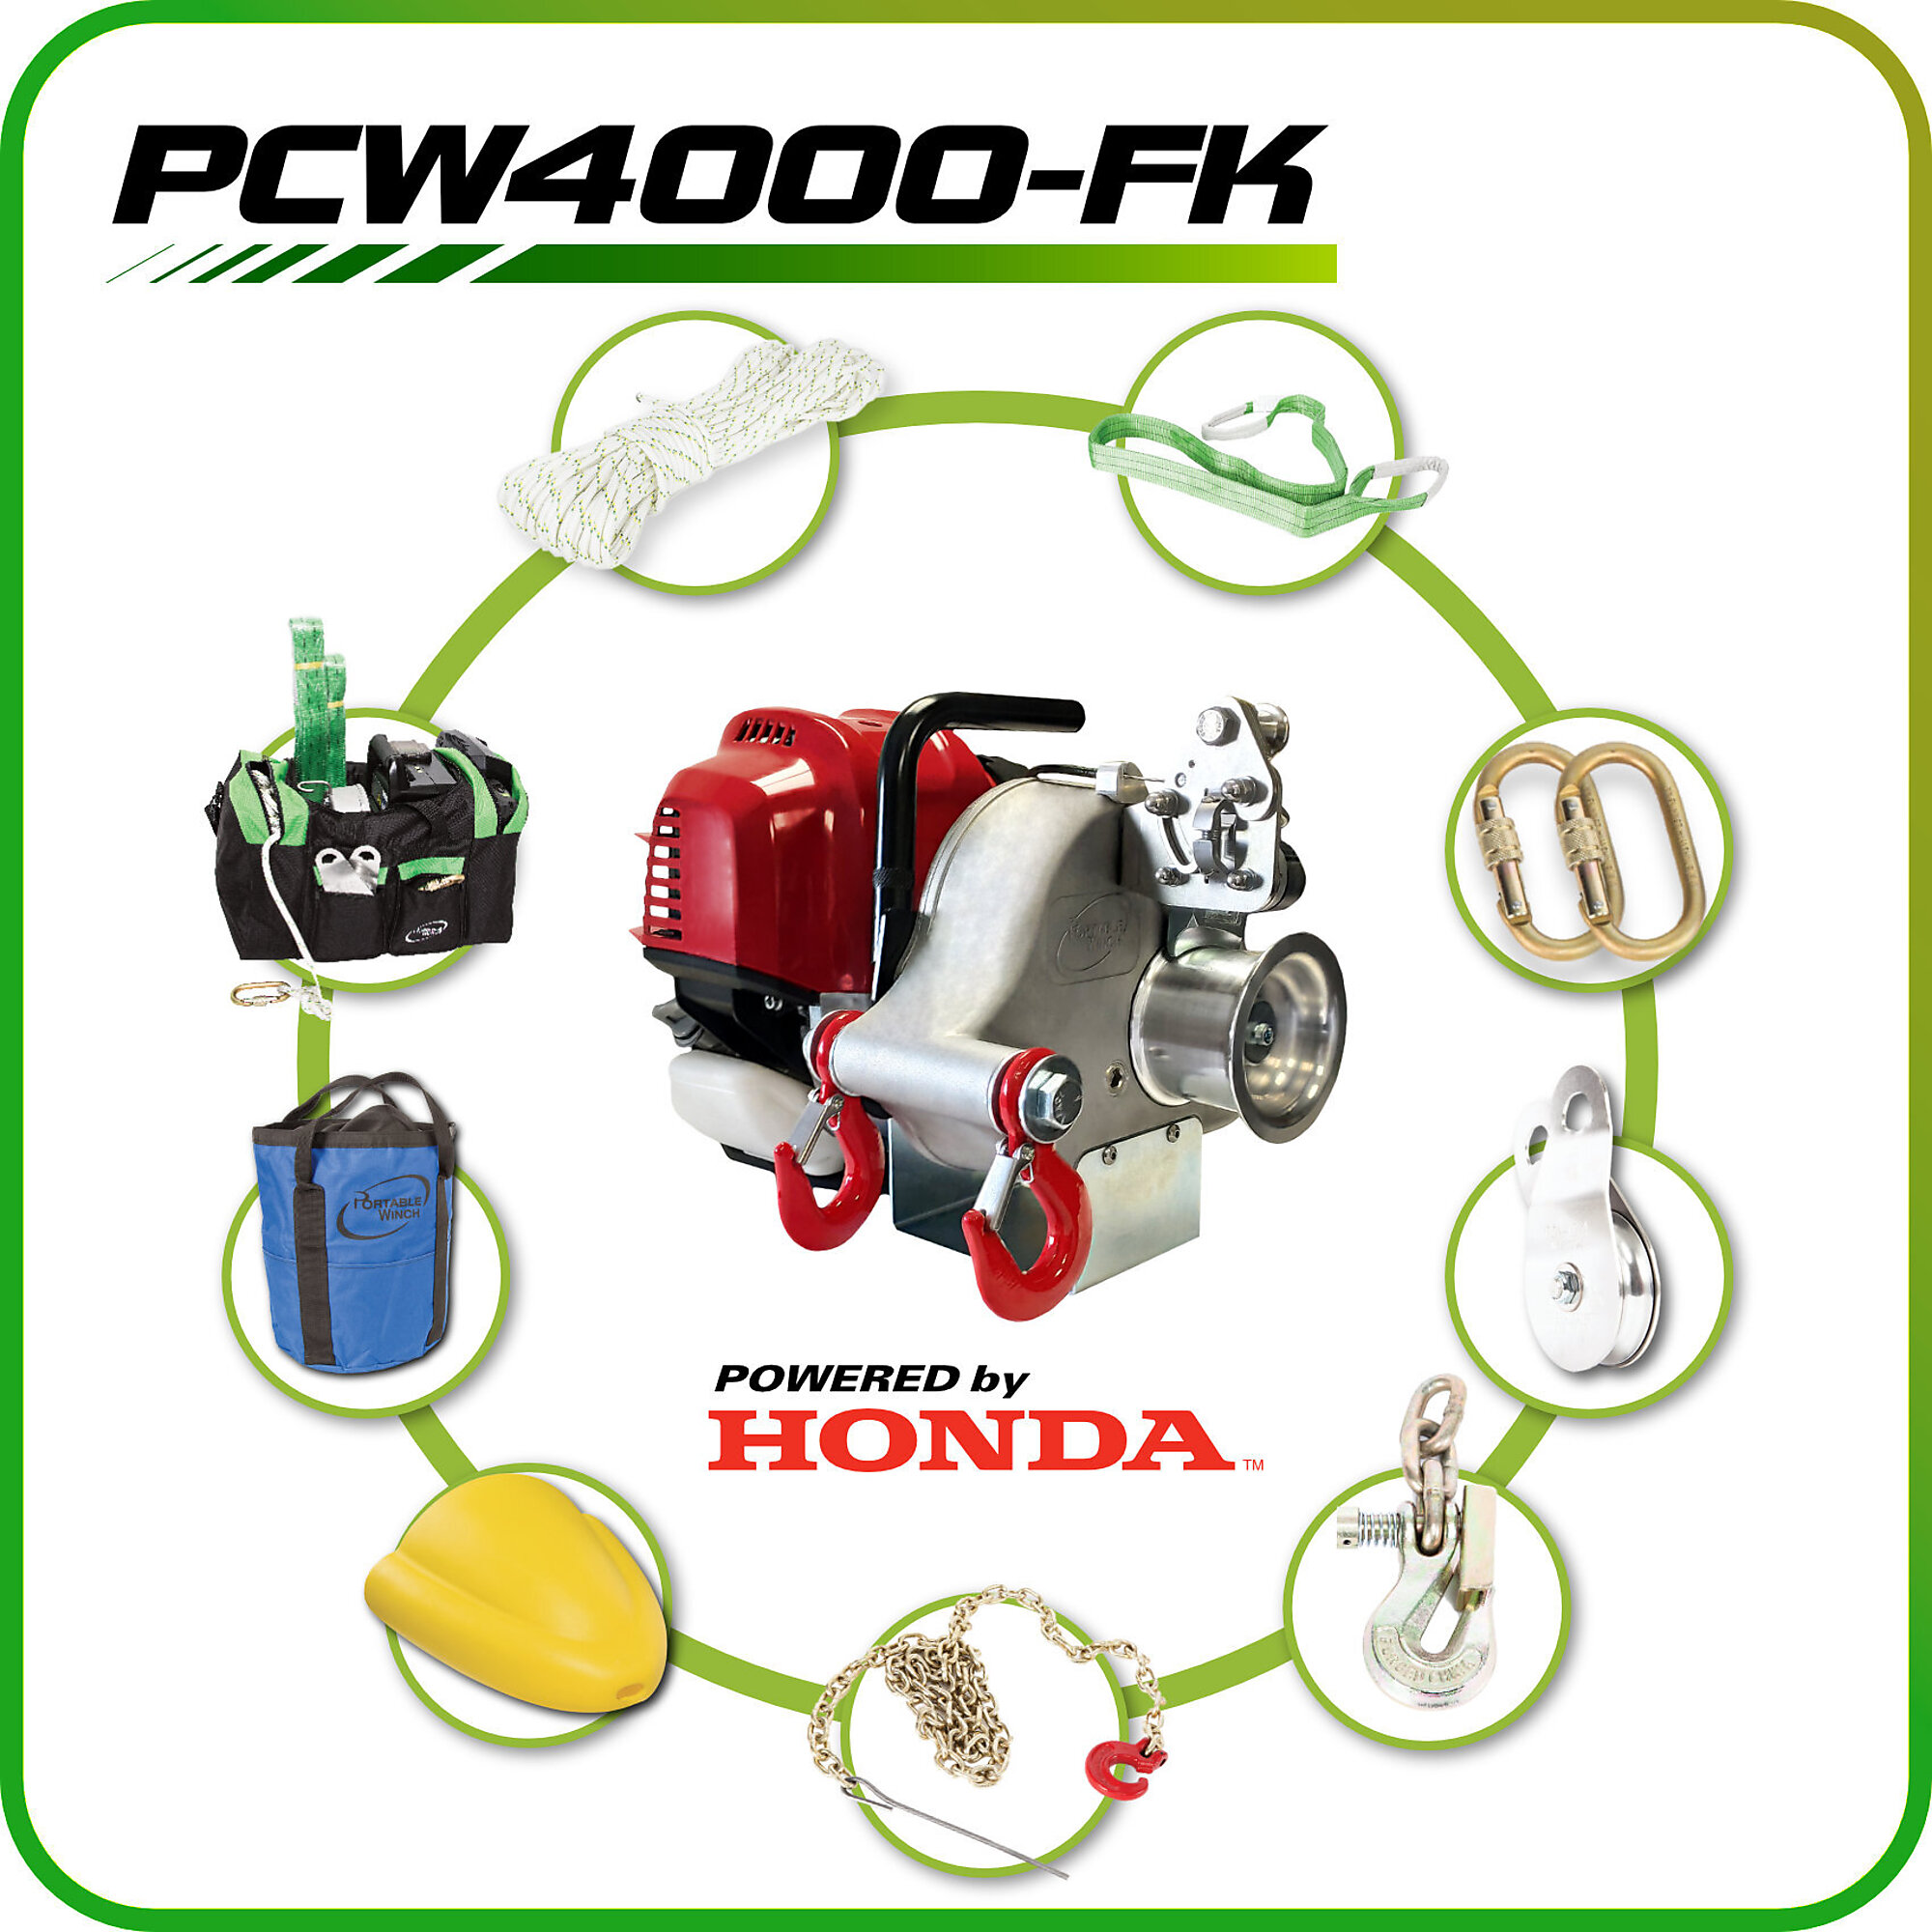 Portable Winch, Gas Pulling Winch Forestry Kit - Honda GX50 Capacity (Line Pull) 2200 lb, Model PCW4000